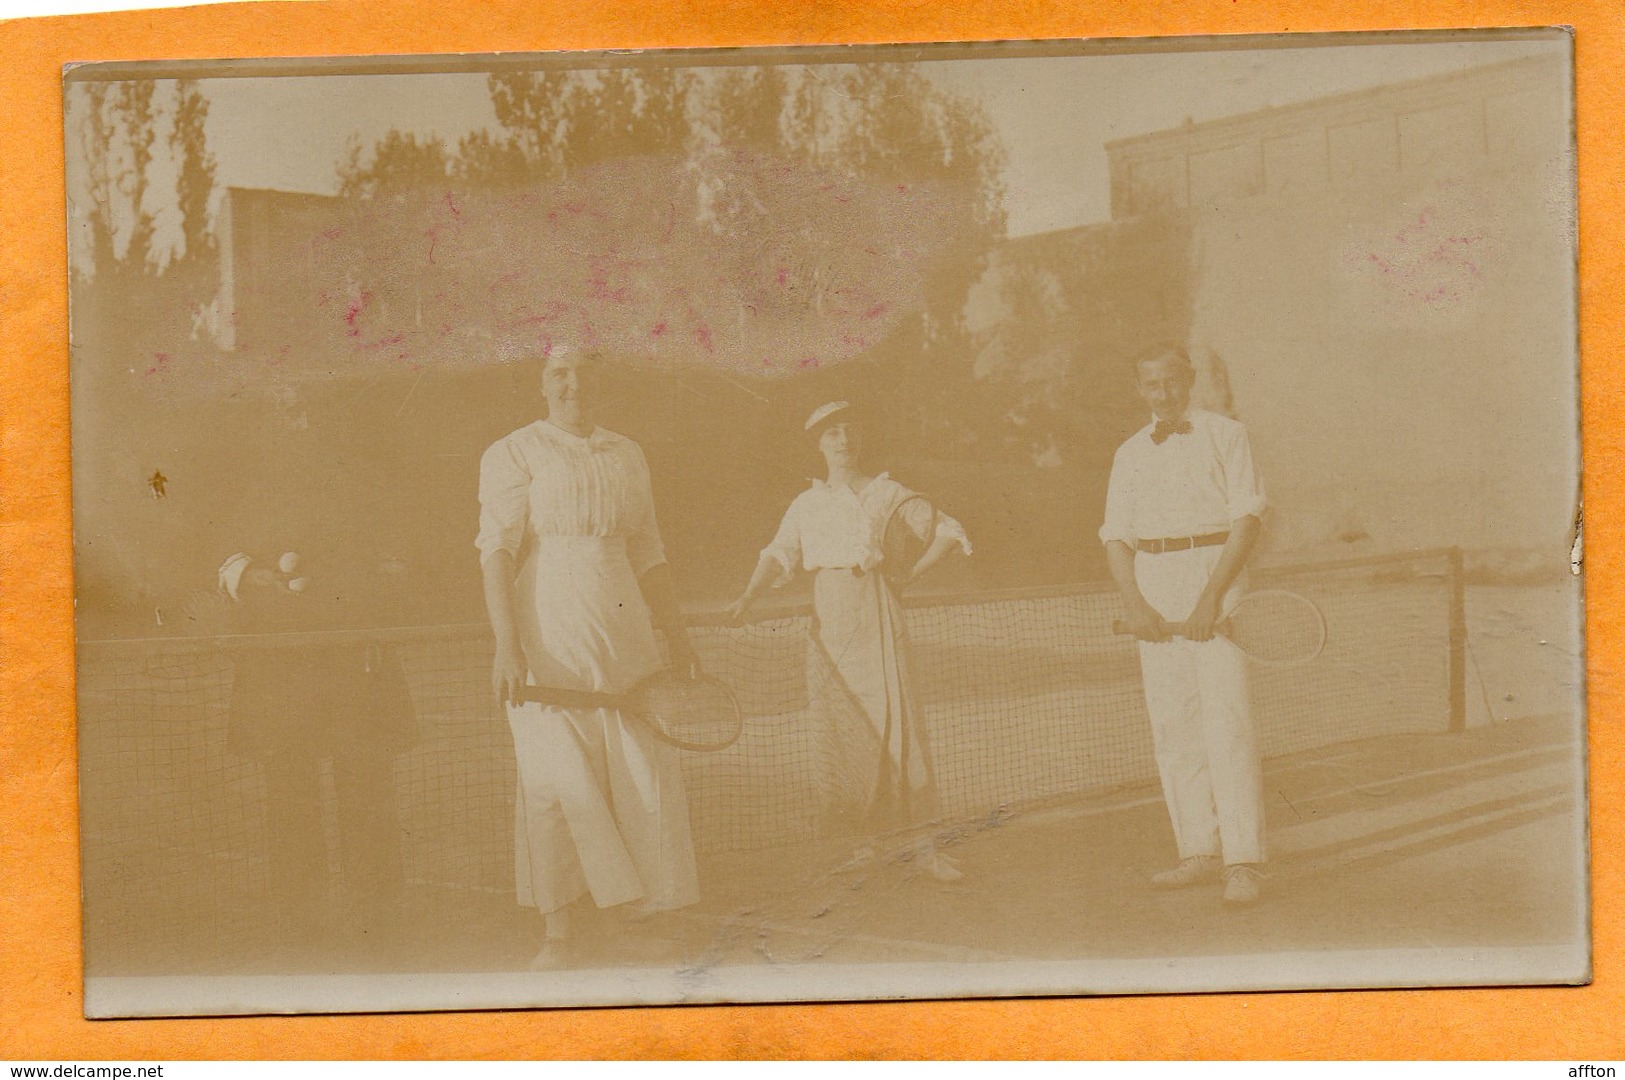 Teheran Iran Playing Tenis 1900 Real Photo Postcard Mailed - Iran